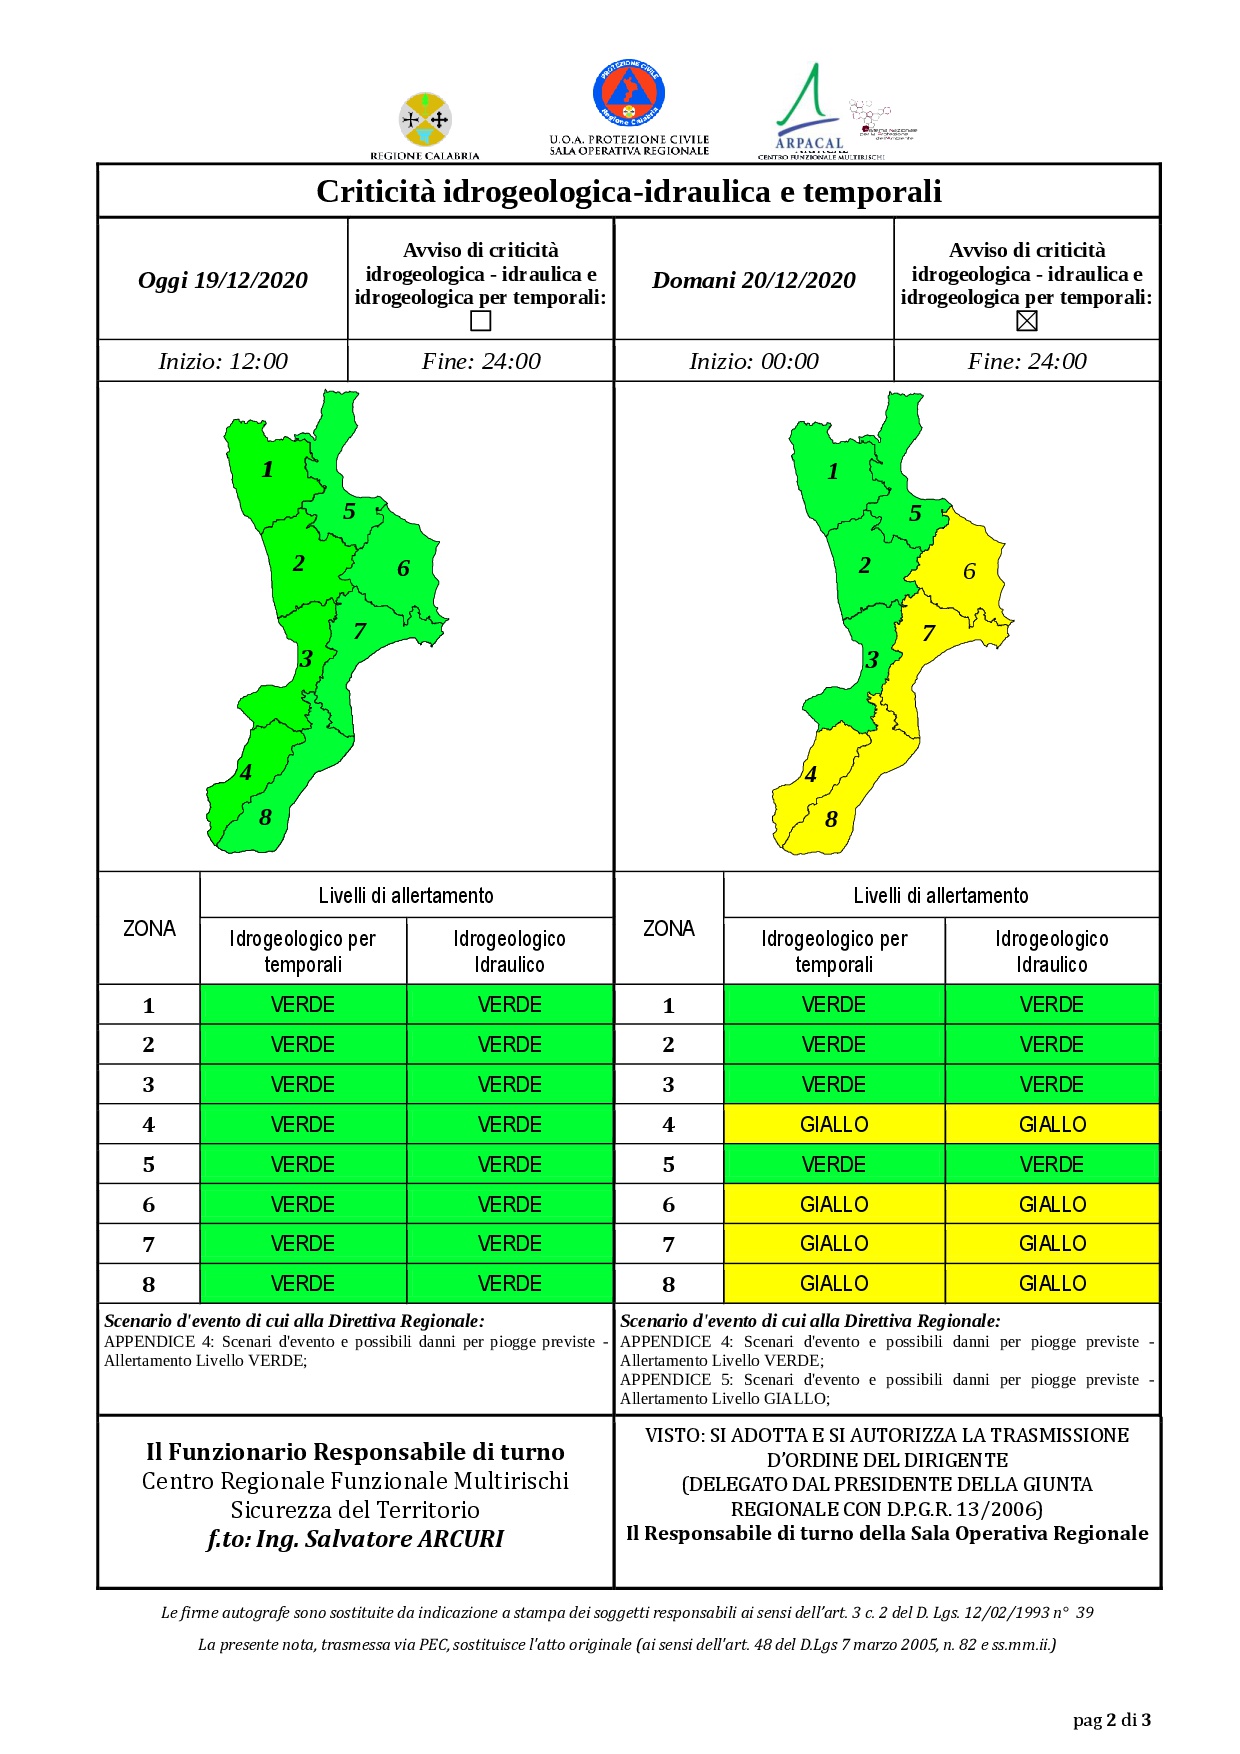 Criticità idrogeologica-idraulica e temporali in Calabria 19-12-2020